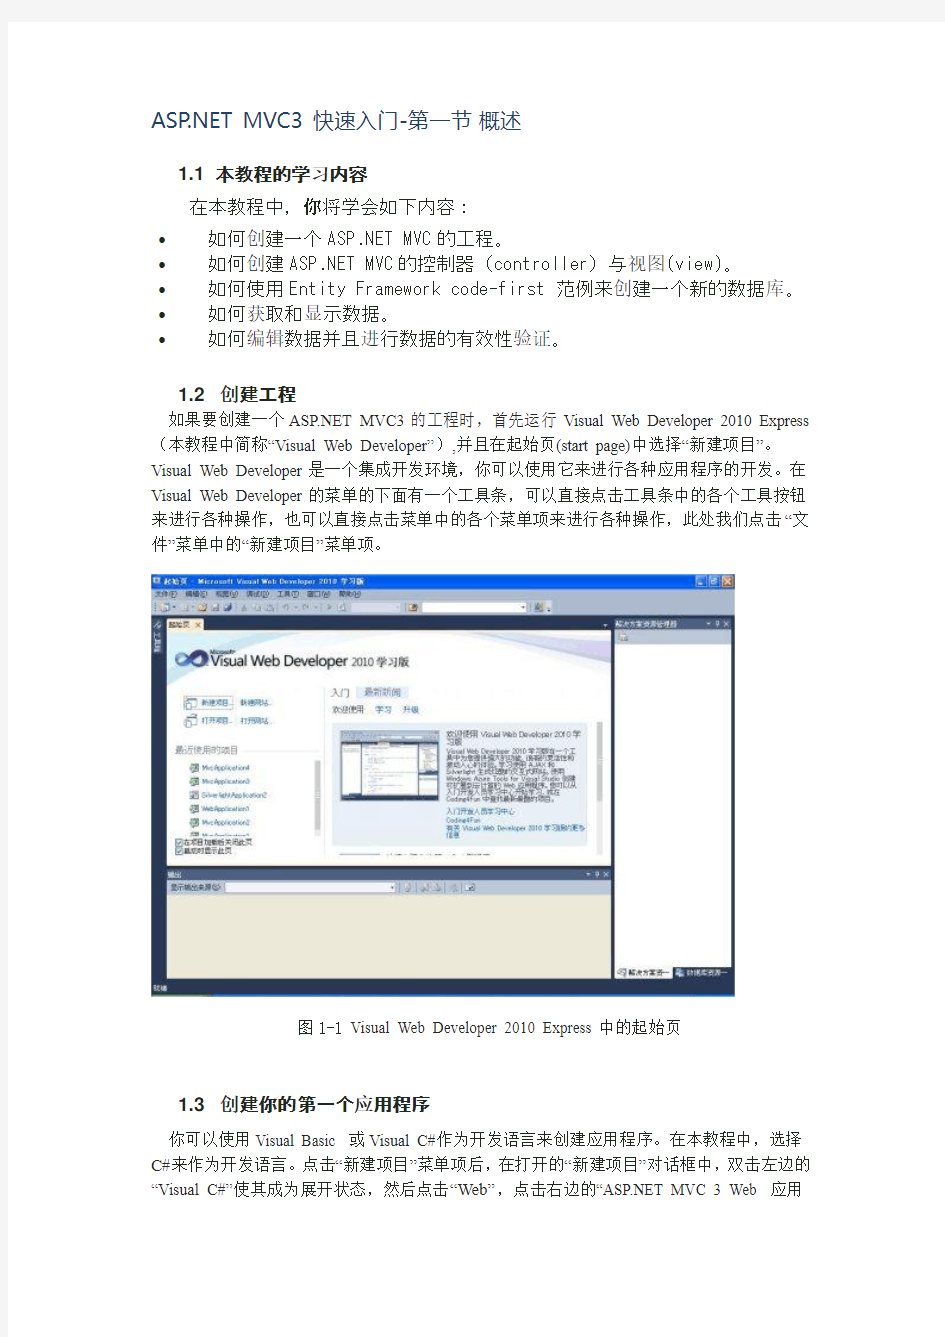 ASP.MVC3.0 MSDN Movies 练习中文教程